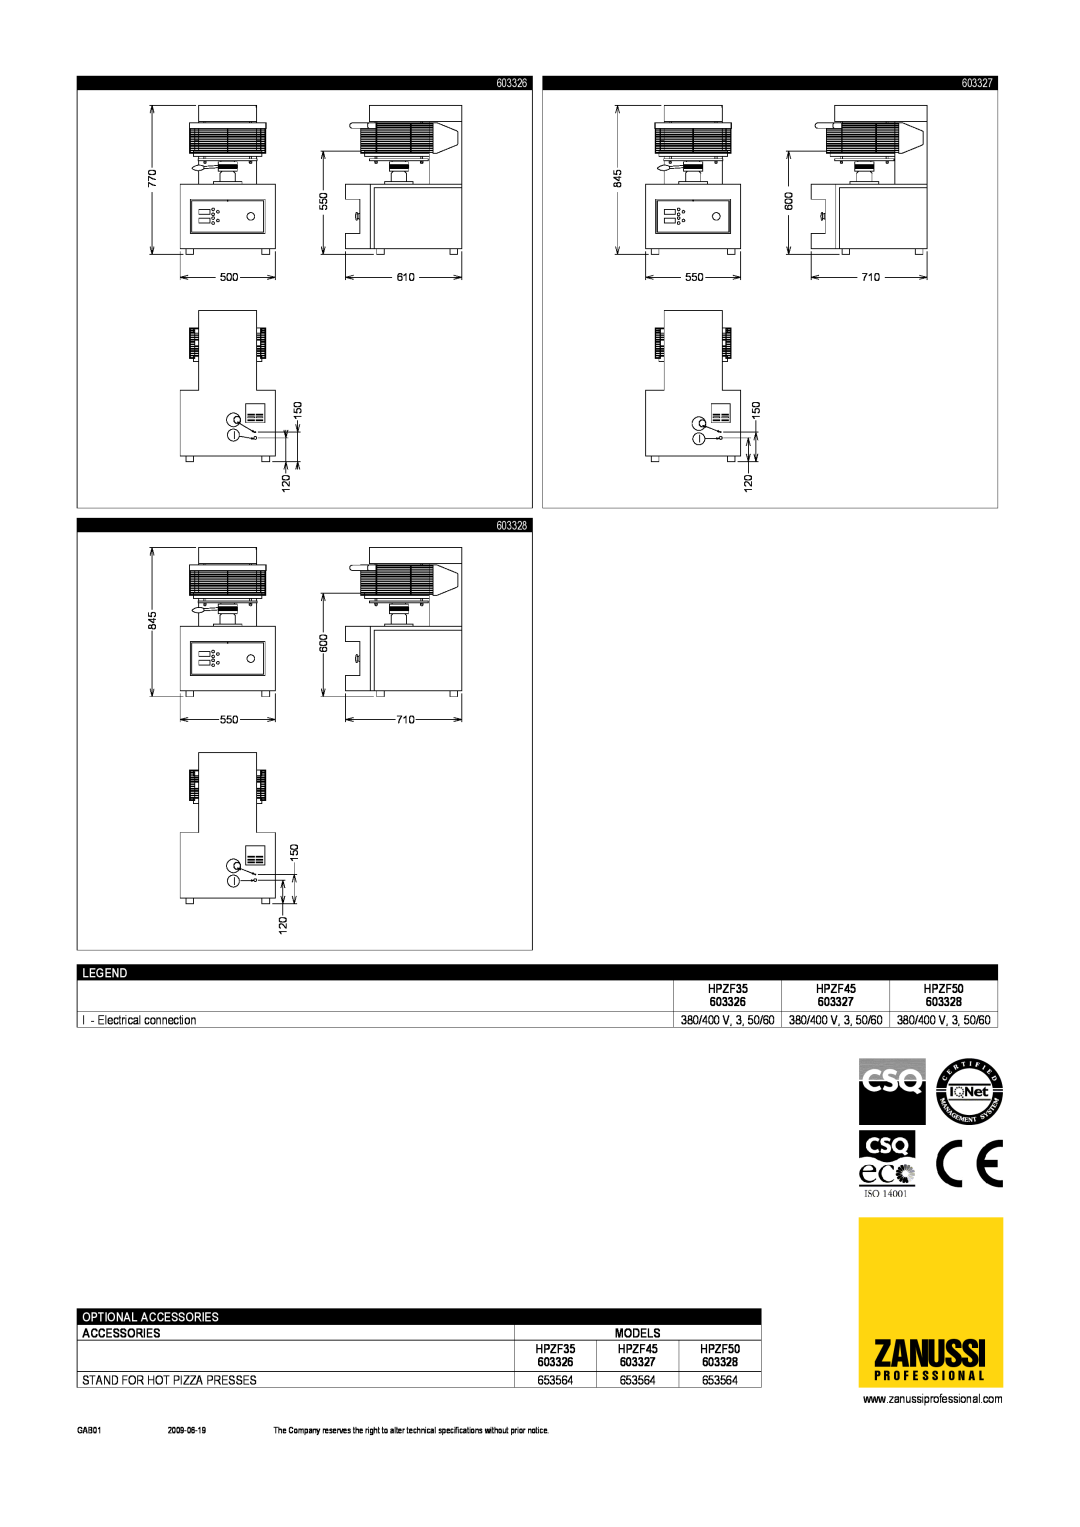 Zanussi 603327 Zanussi, 603326, 603328, I - Electrical connection, 380/400 V, 3, 50/60, Optional Accessories, Models 